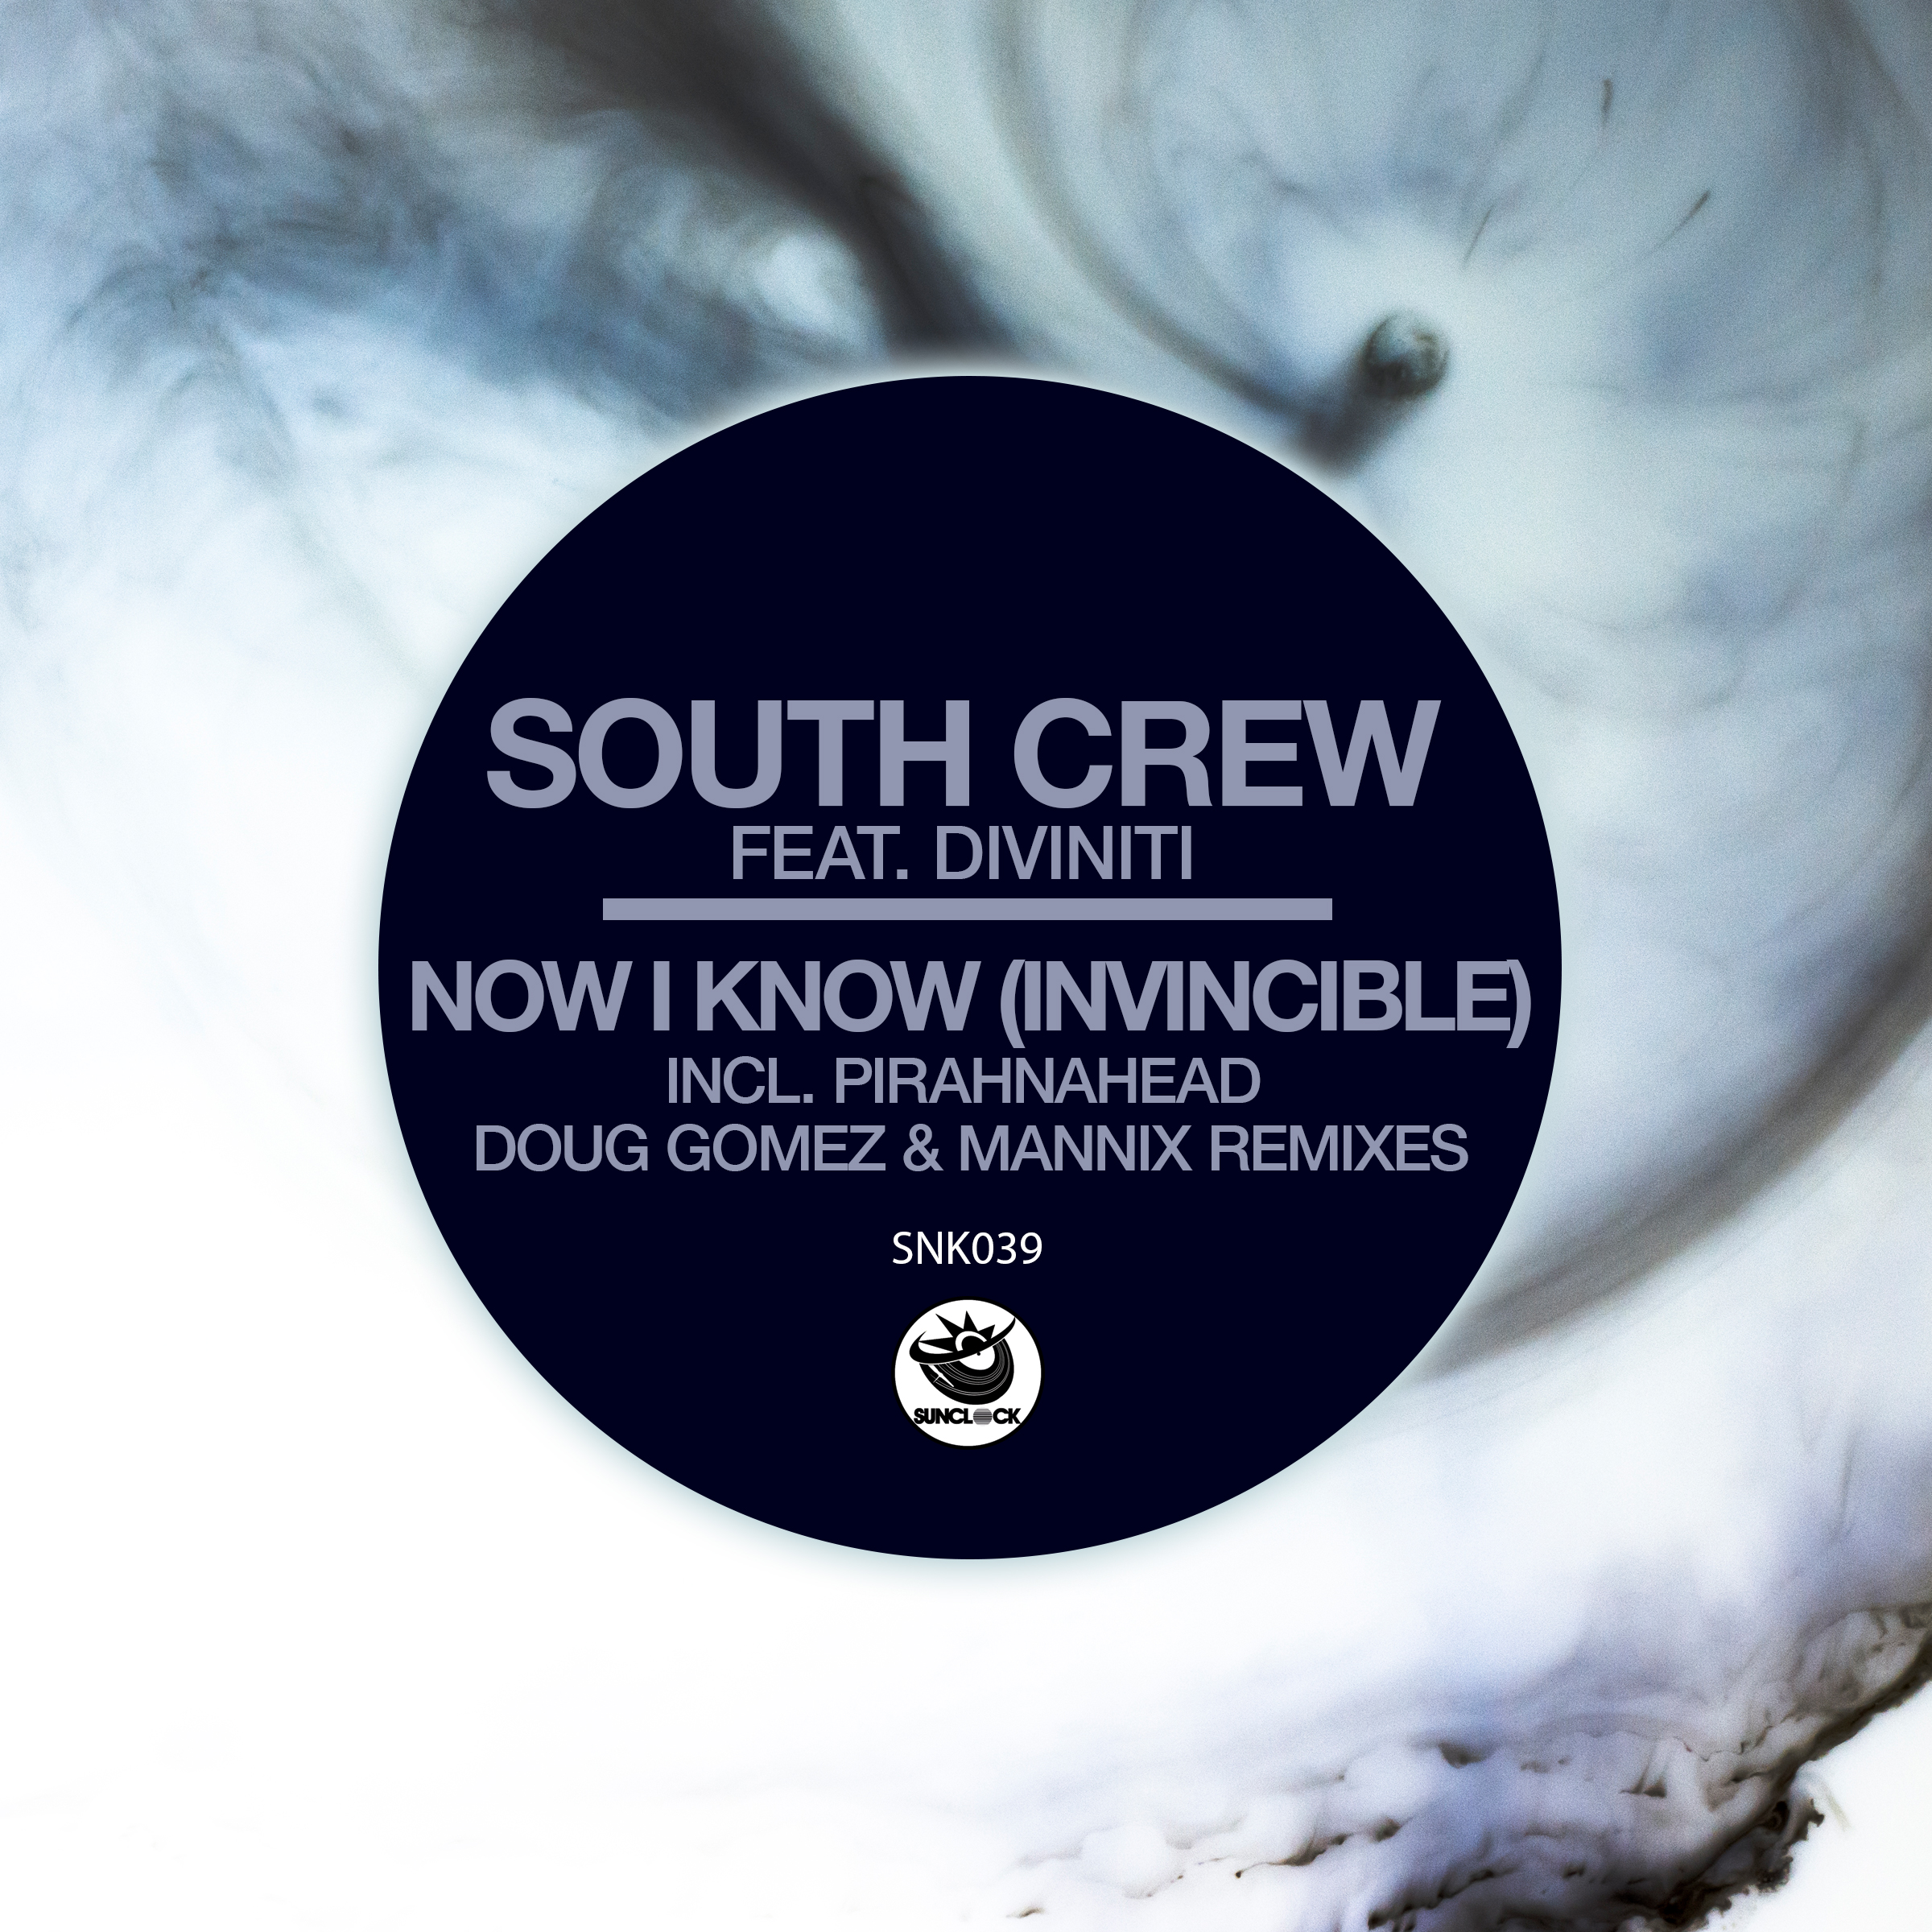 South Crew feat. Diviniti - Now I Know (Invincible) (incl. Piranhahead, Doug Gomez & Mannix Remixes) - SNK039 Cover